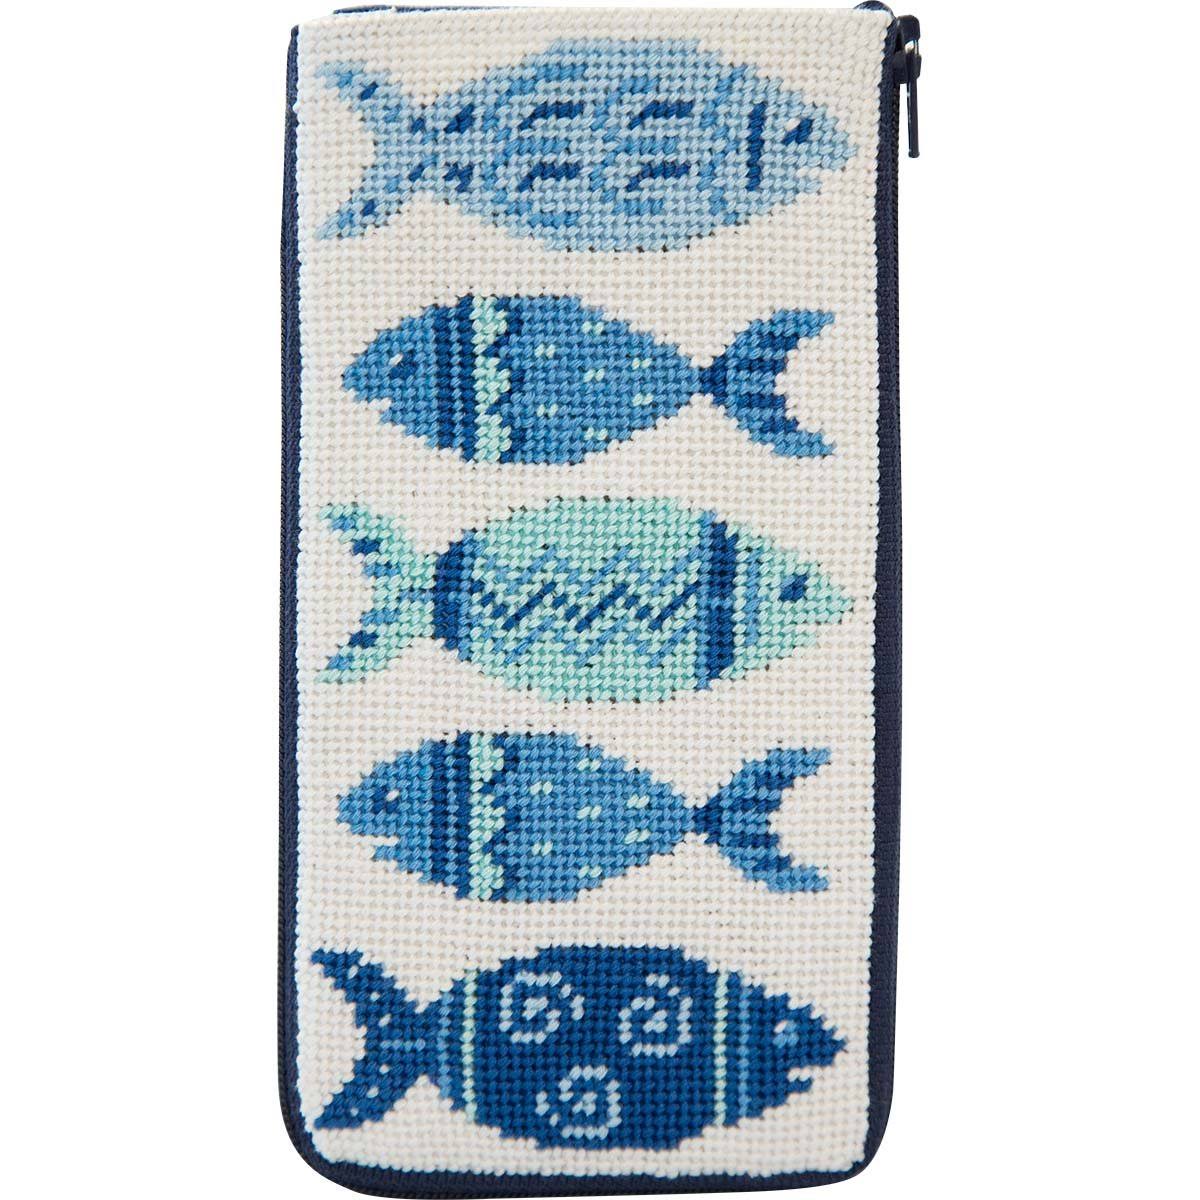 Alice Peterson Stitch & Zip Eyeglass Case Needlepoint Kit- Blue Fishes